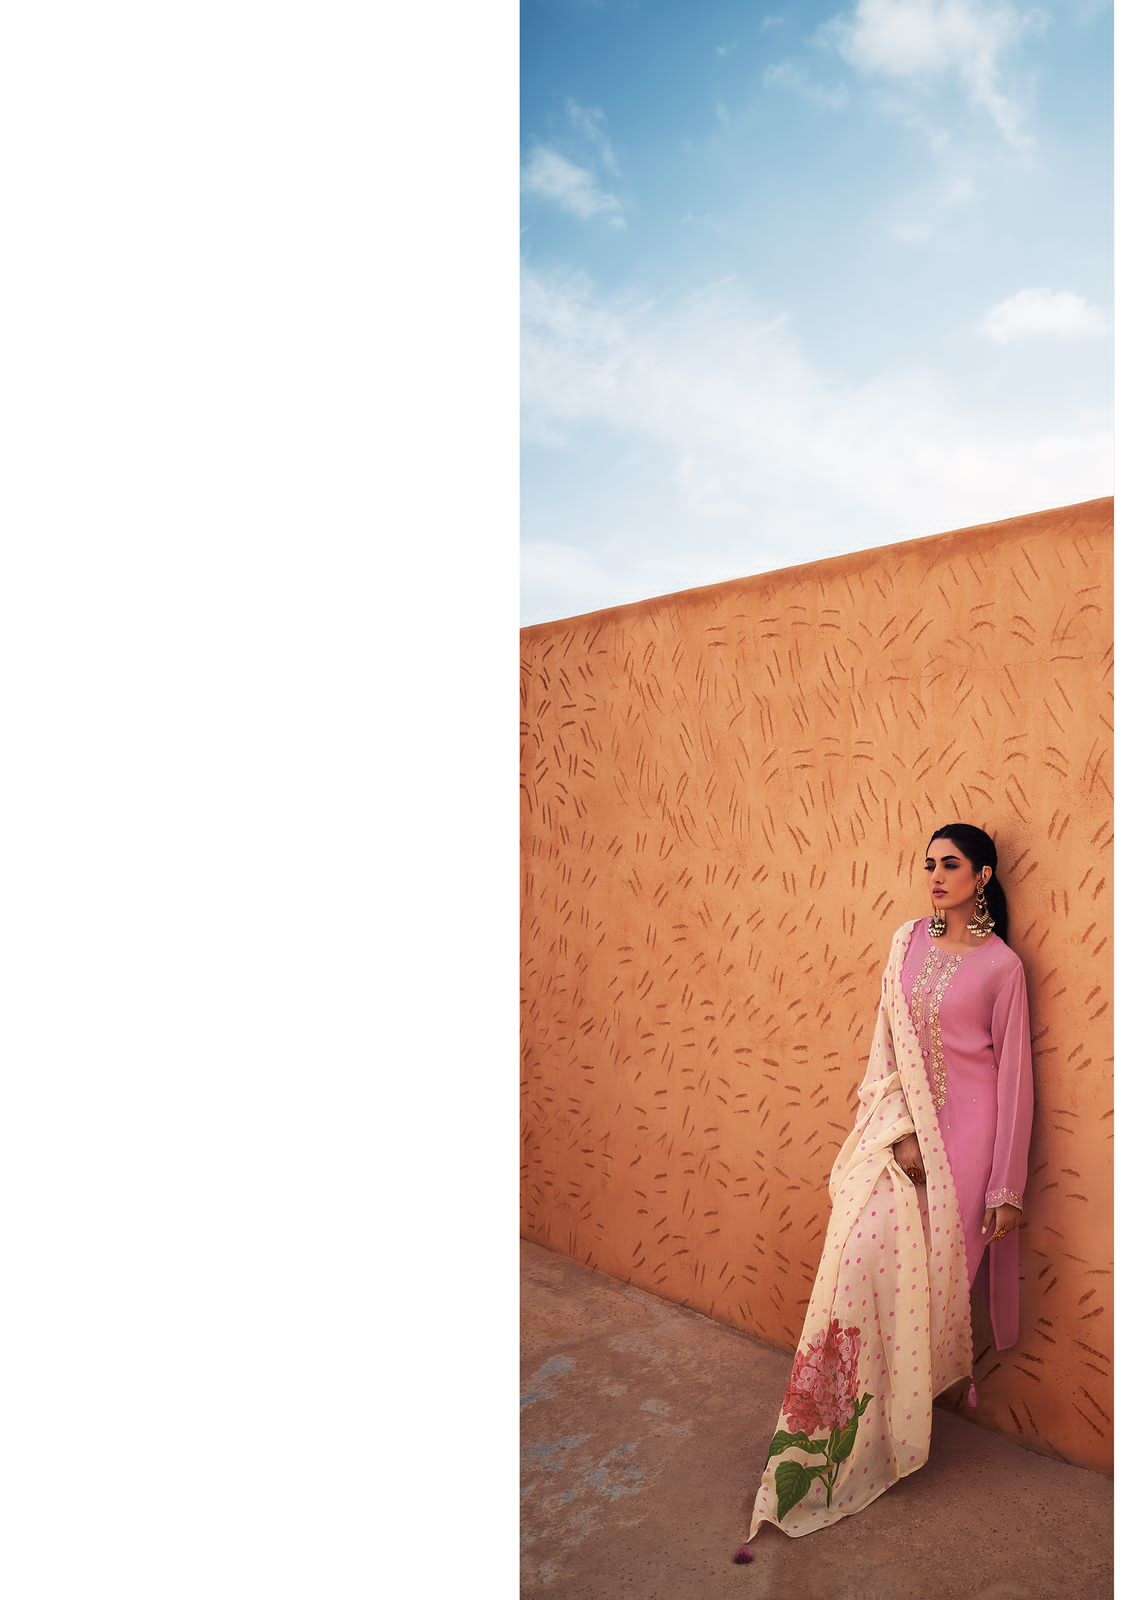 varsha fashion scent of love 01-04 series stylish designer salwar kameez catalogue wholesaler surat 